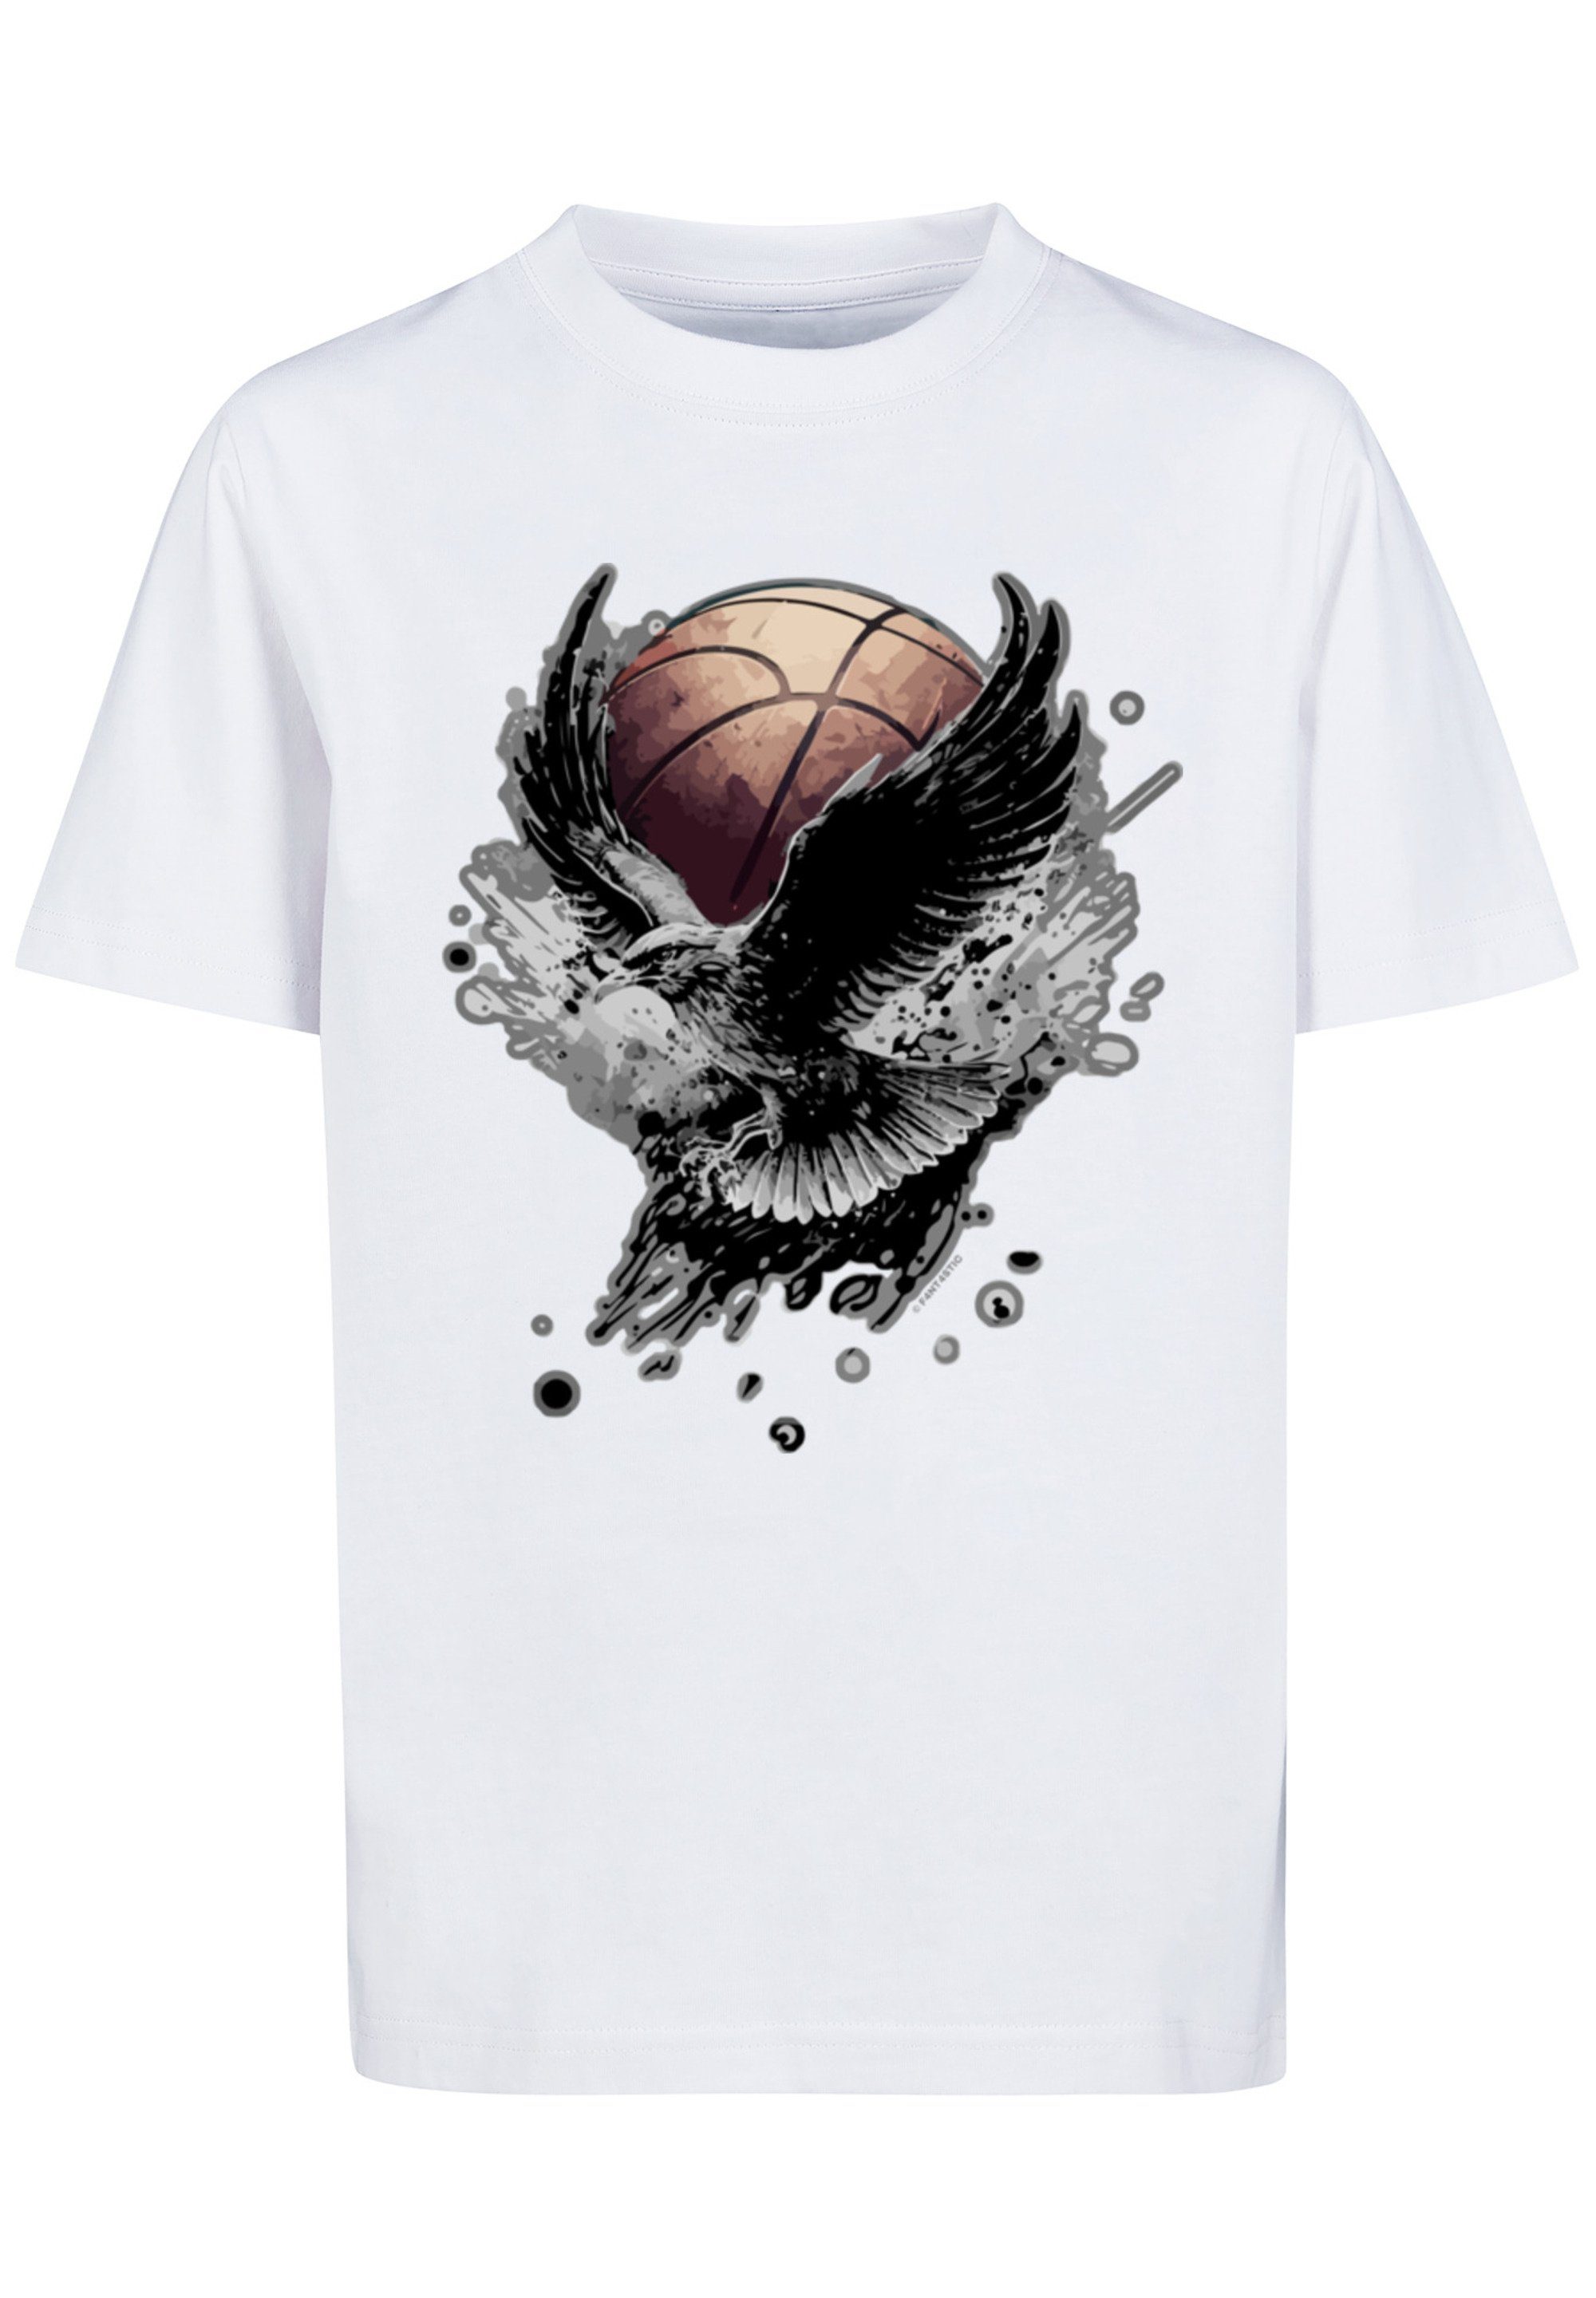 F4NT4STIC T-Shirt Basketball Adler trägt 145 Print, und Das 145/152 ist groß Größe Model cm